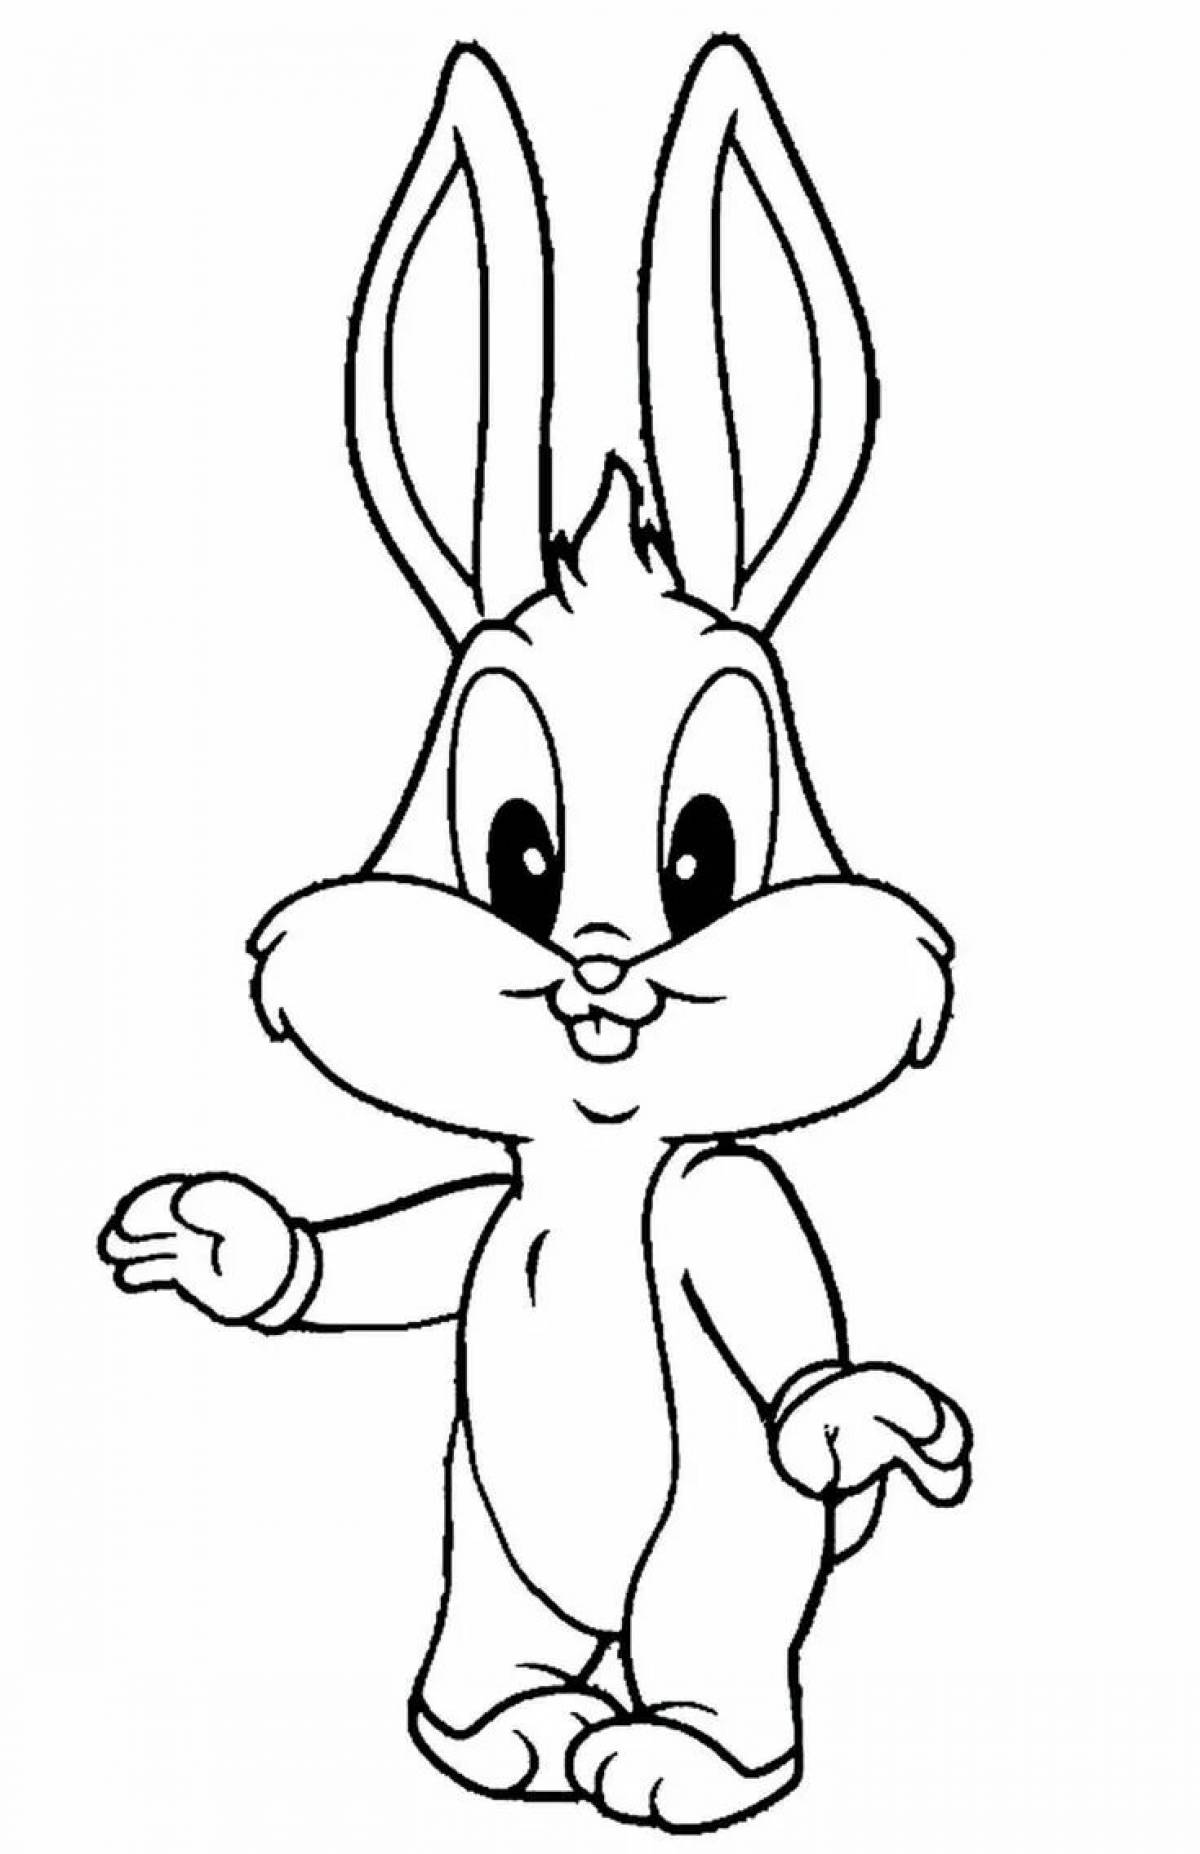 Big-cheeked rabbit cartoon coloring book